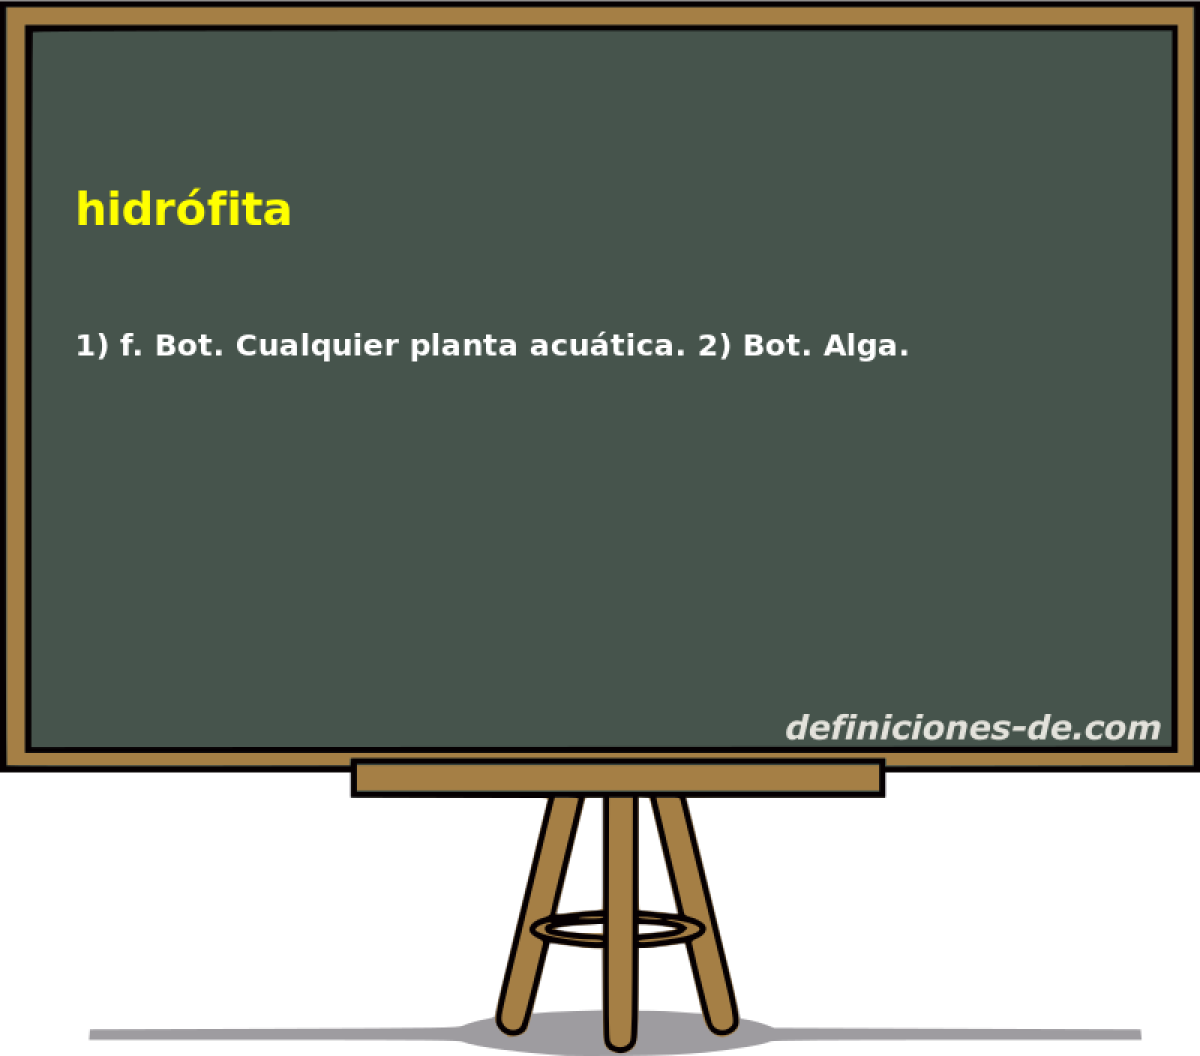 hidrfita 